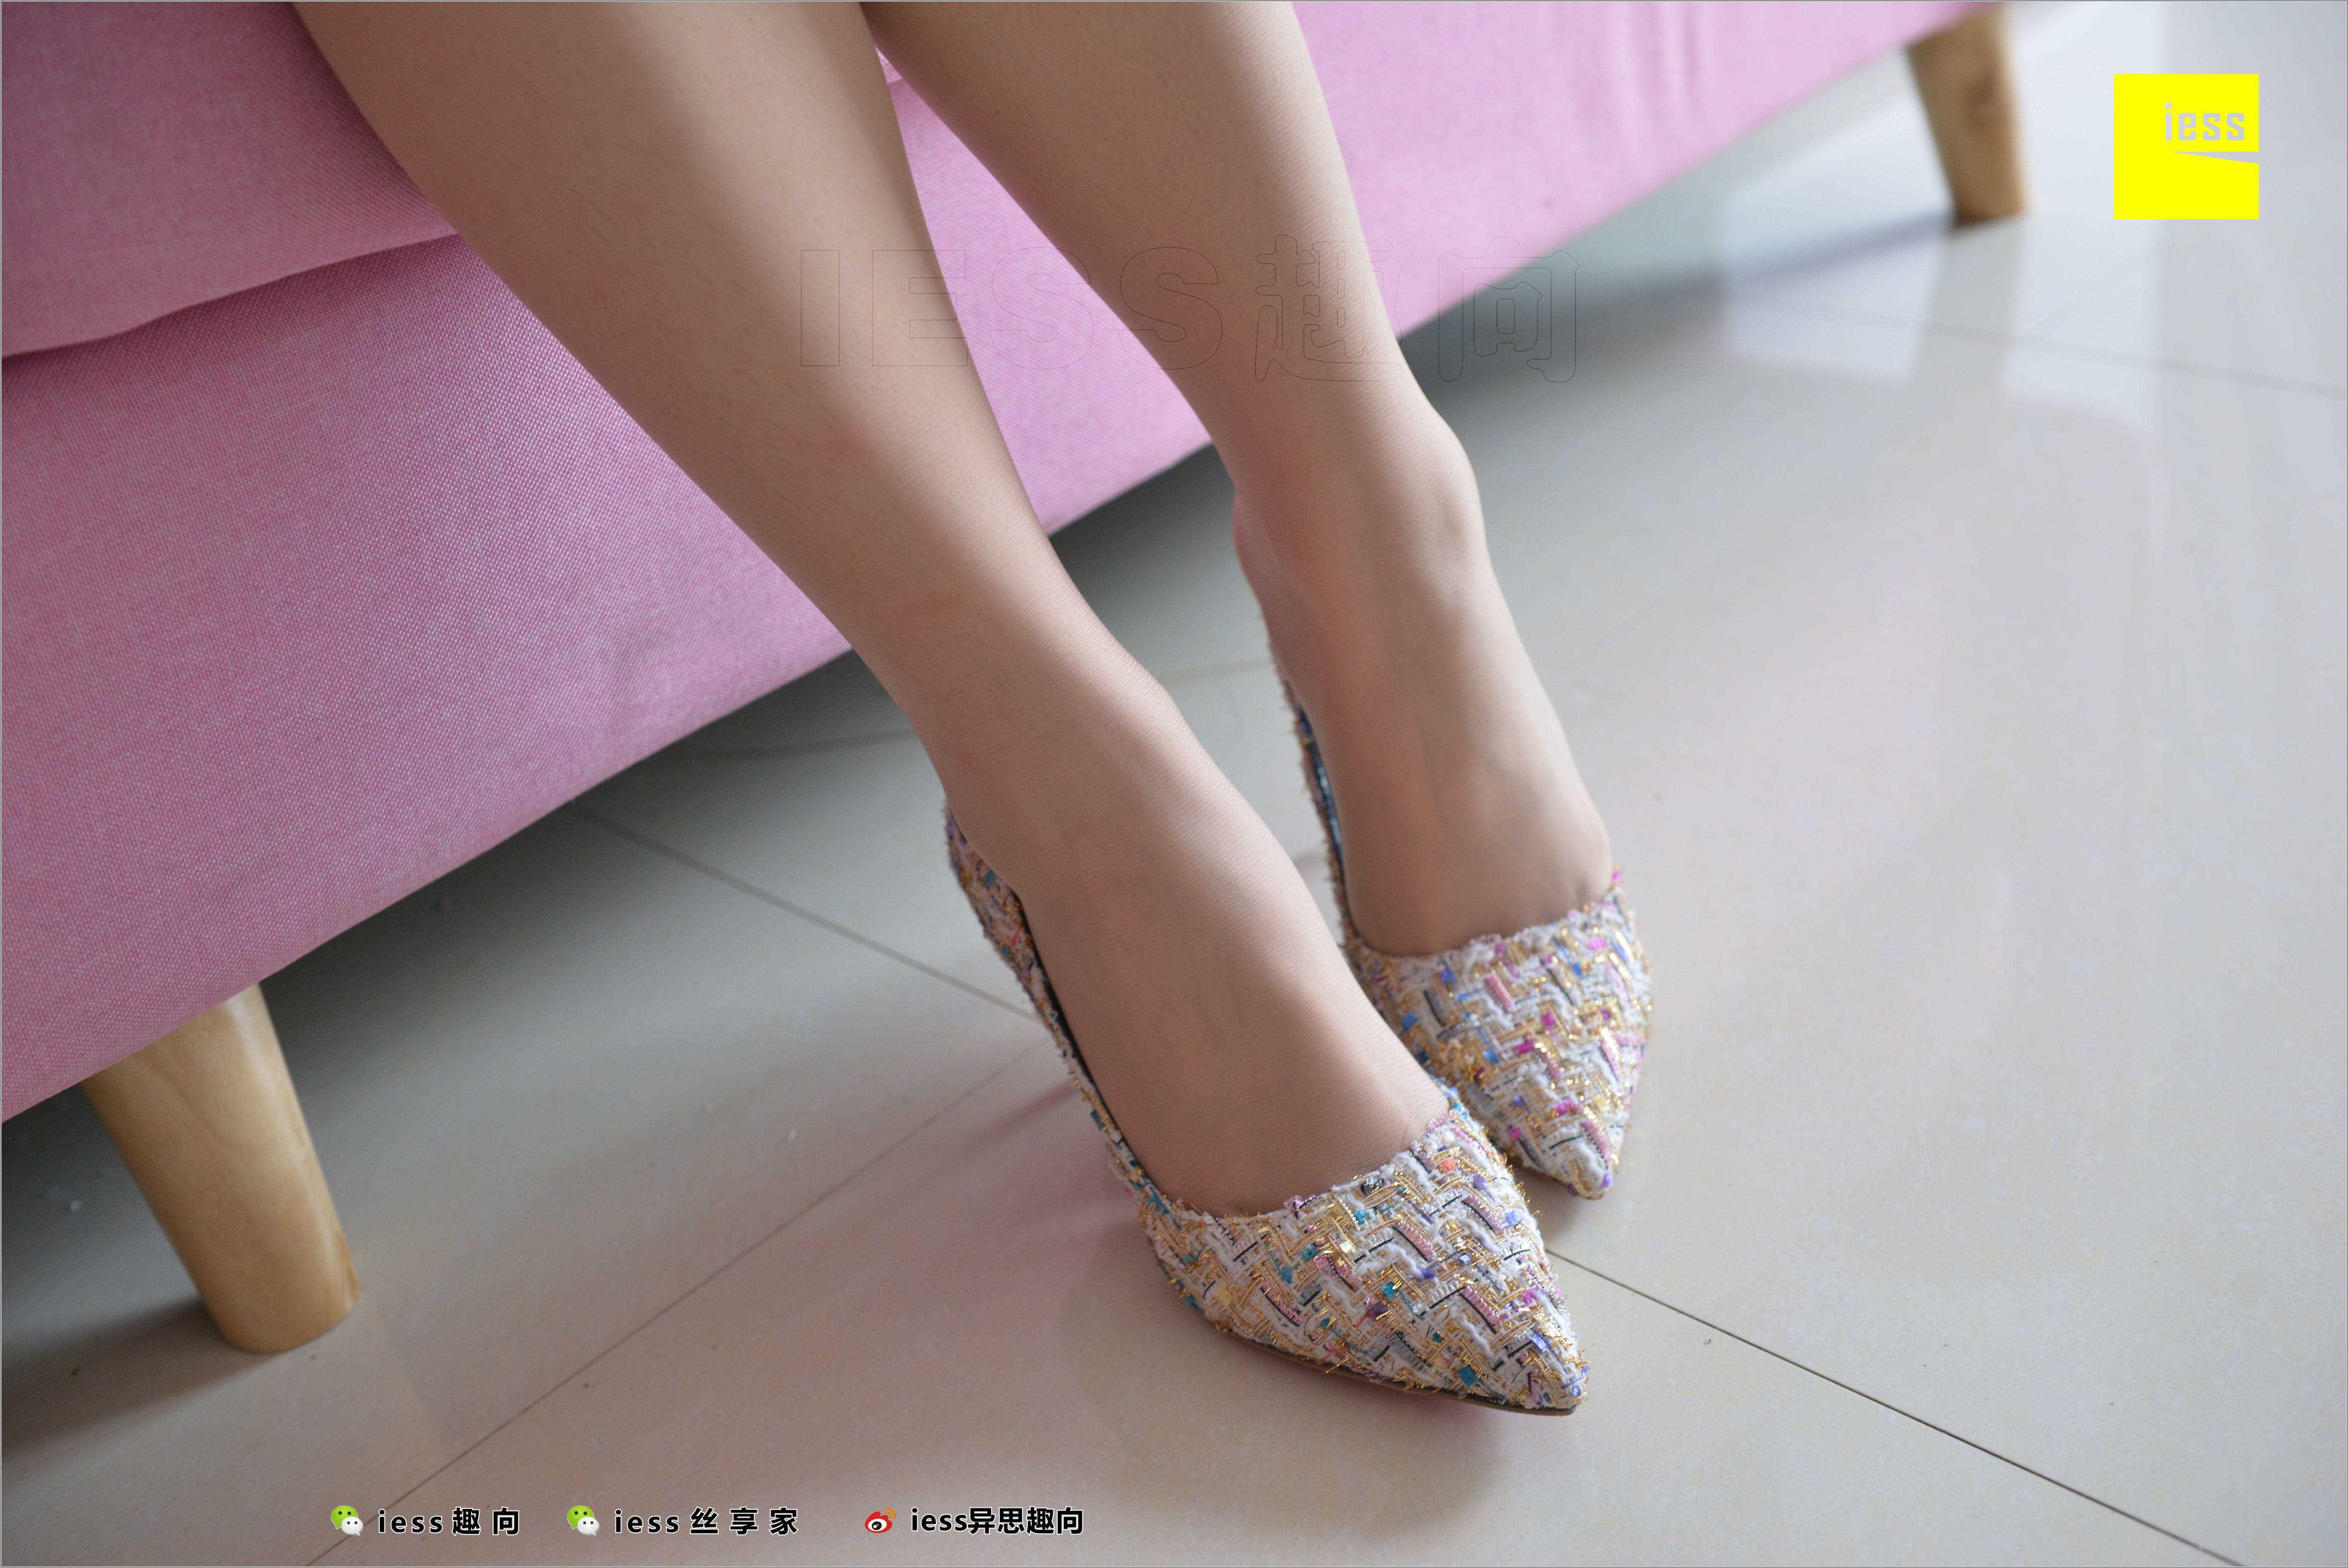 China Beauty Legs and feet 522